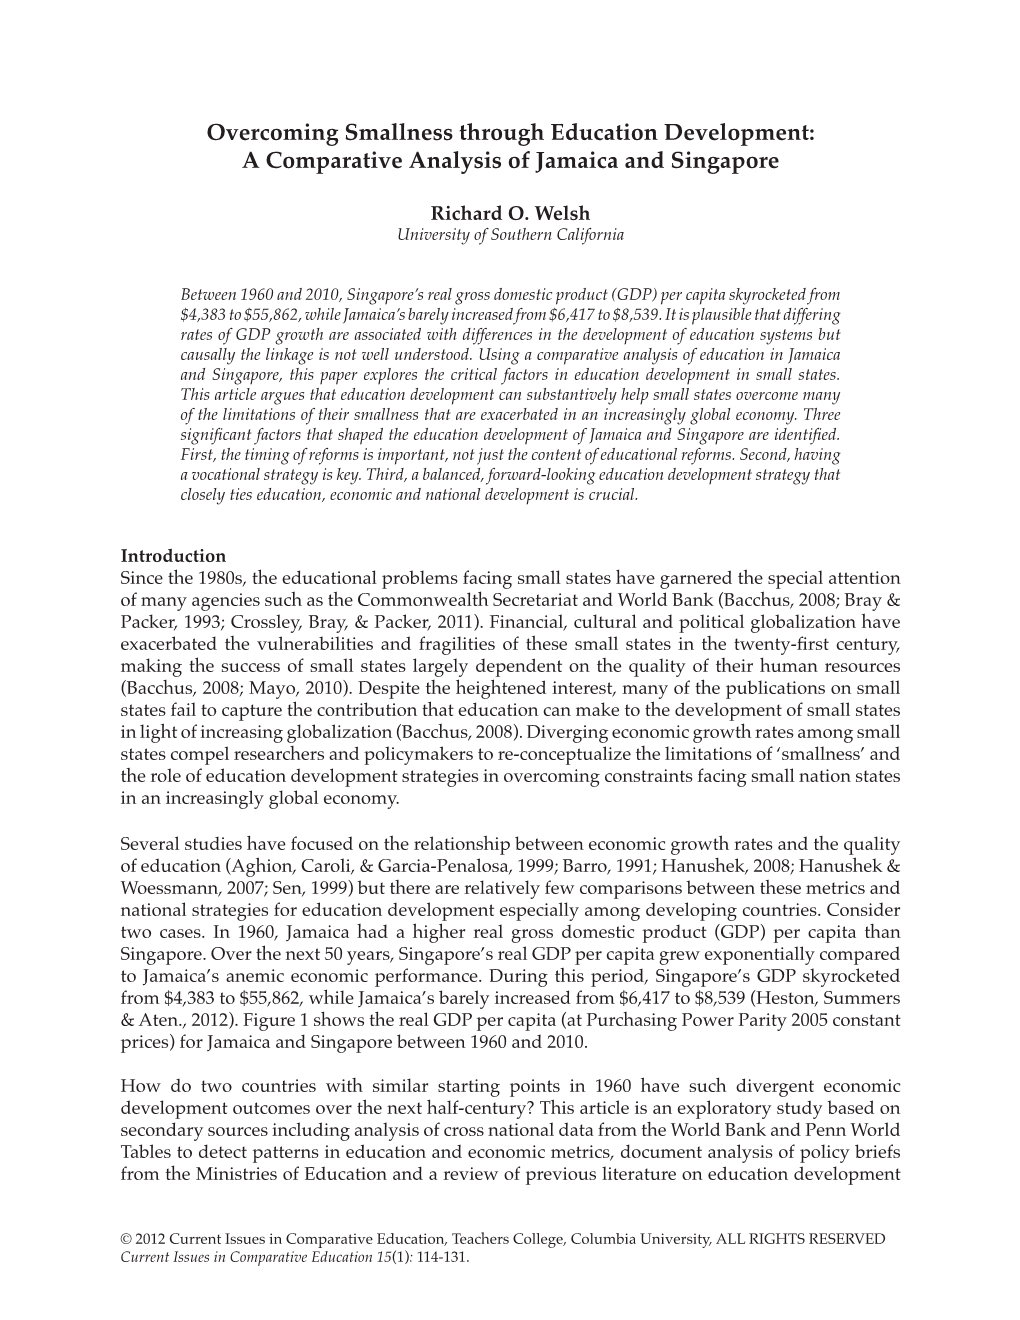 A Comparative Analysis of Jamaica and Singapore